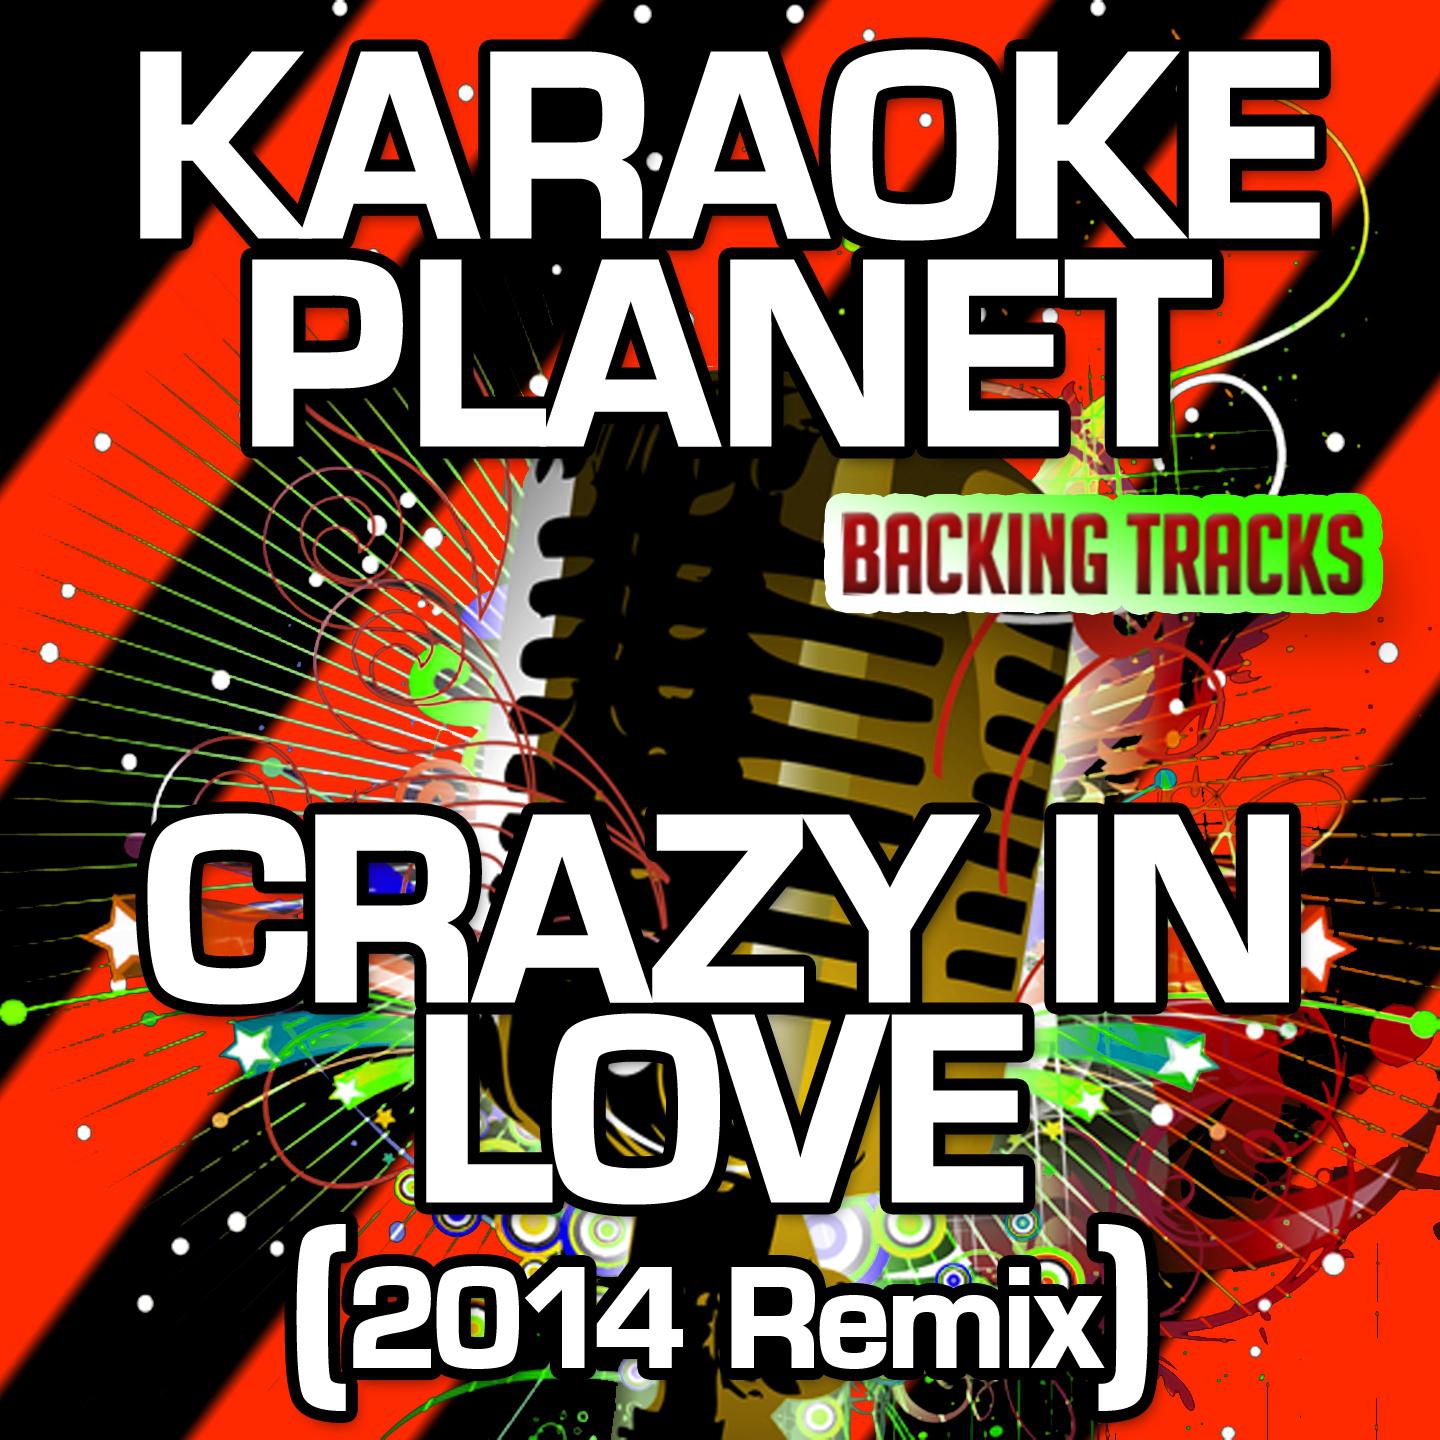 Crazy in Love (2014 Remix) [Karaoke Version]